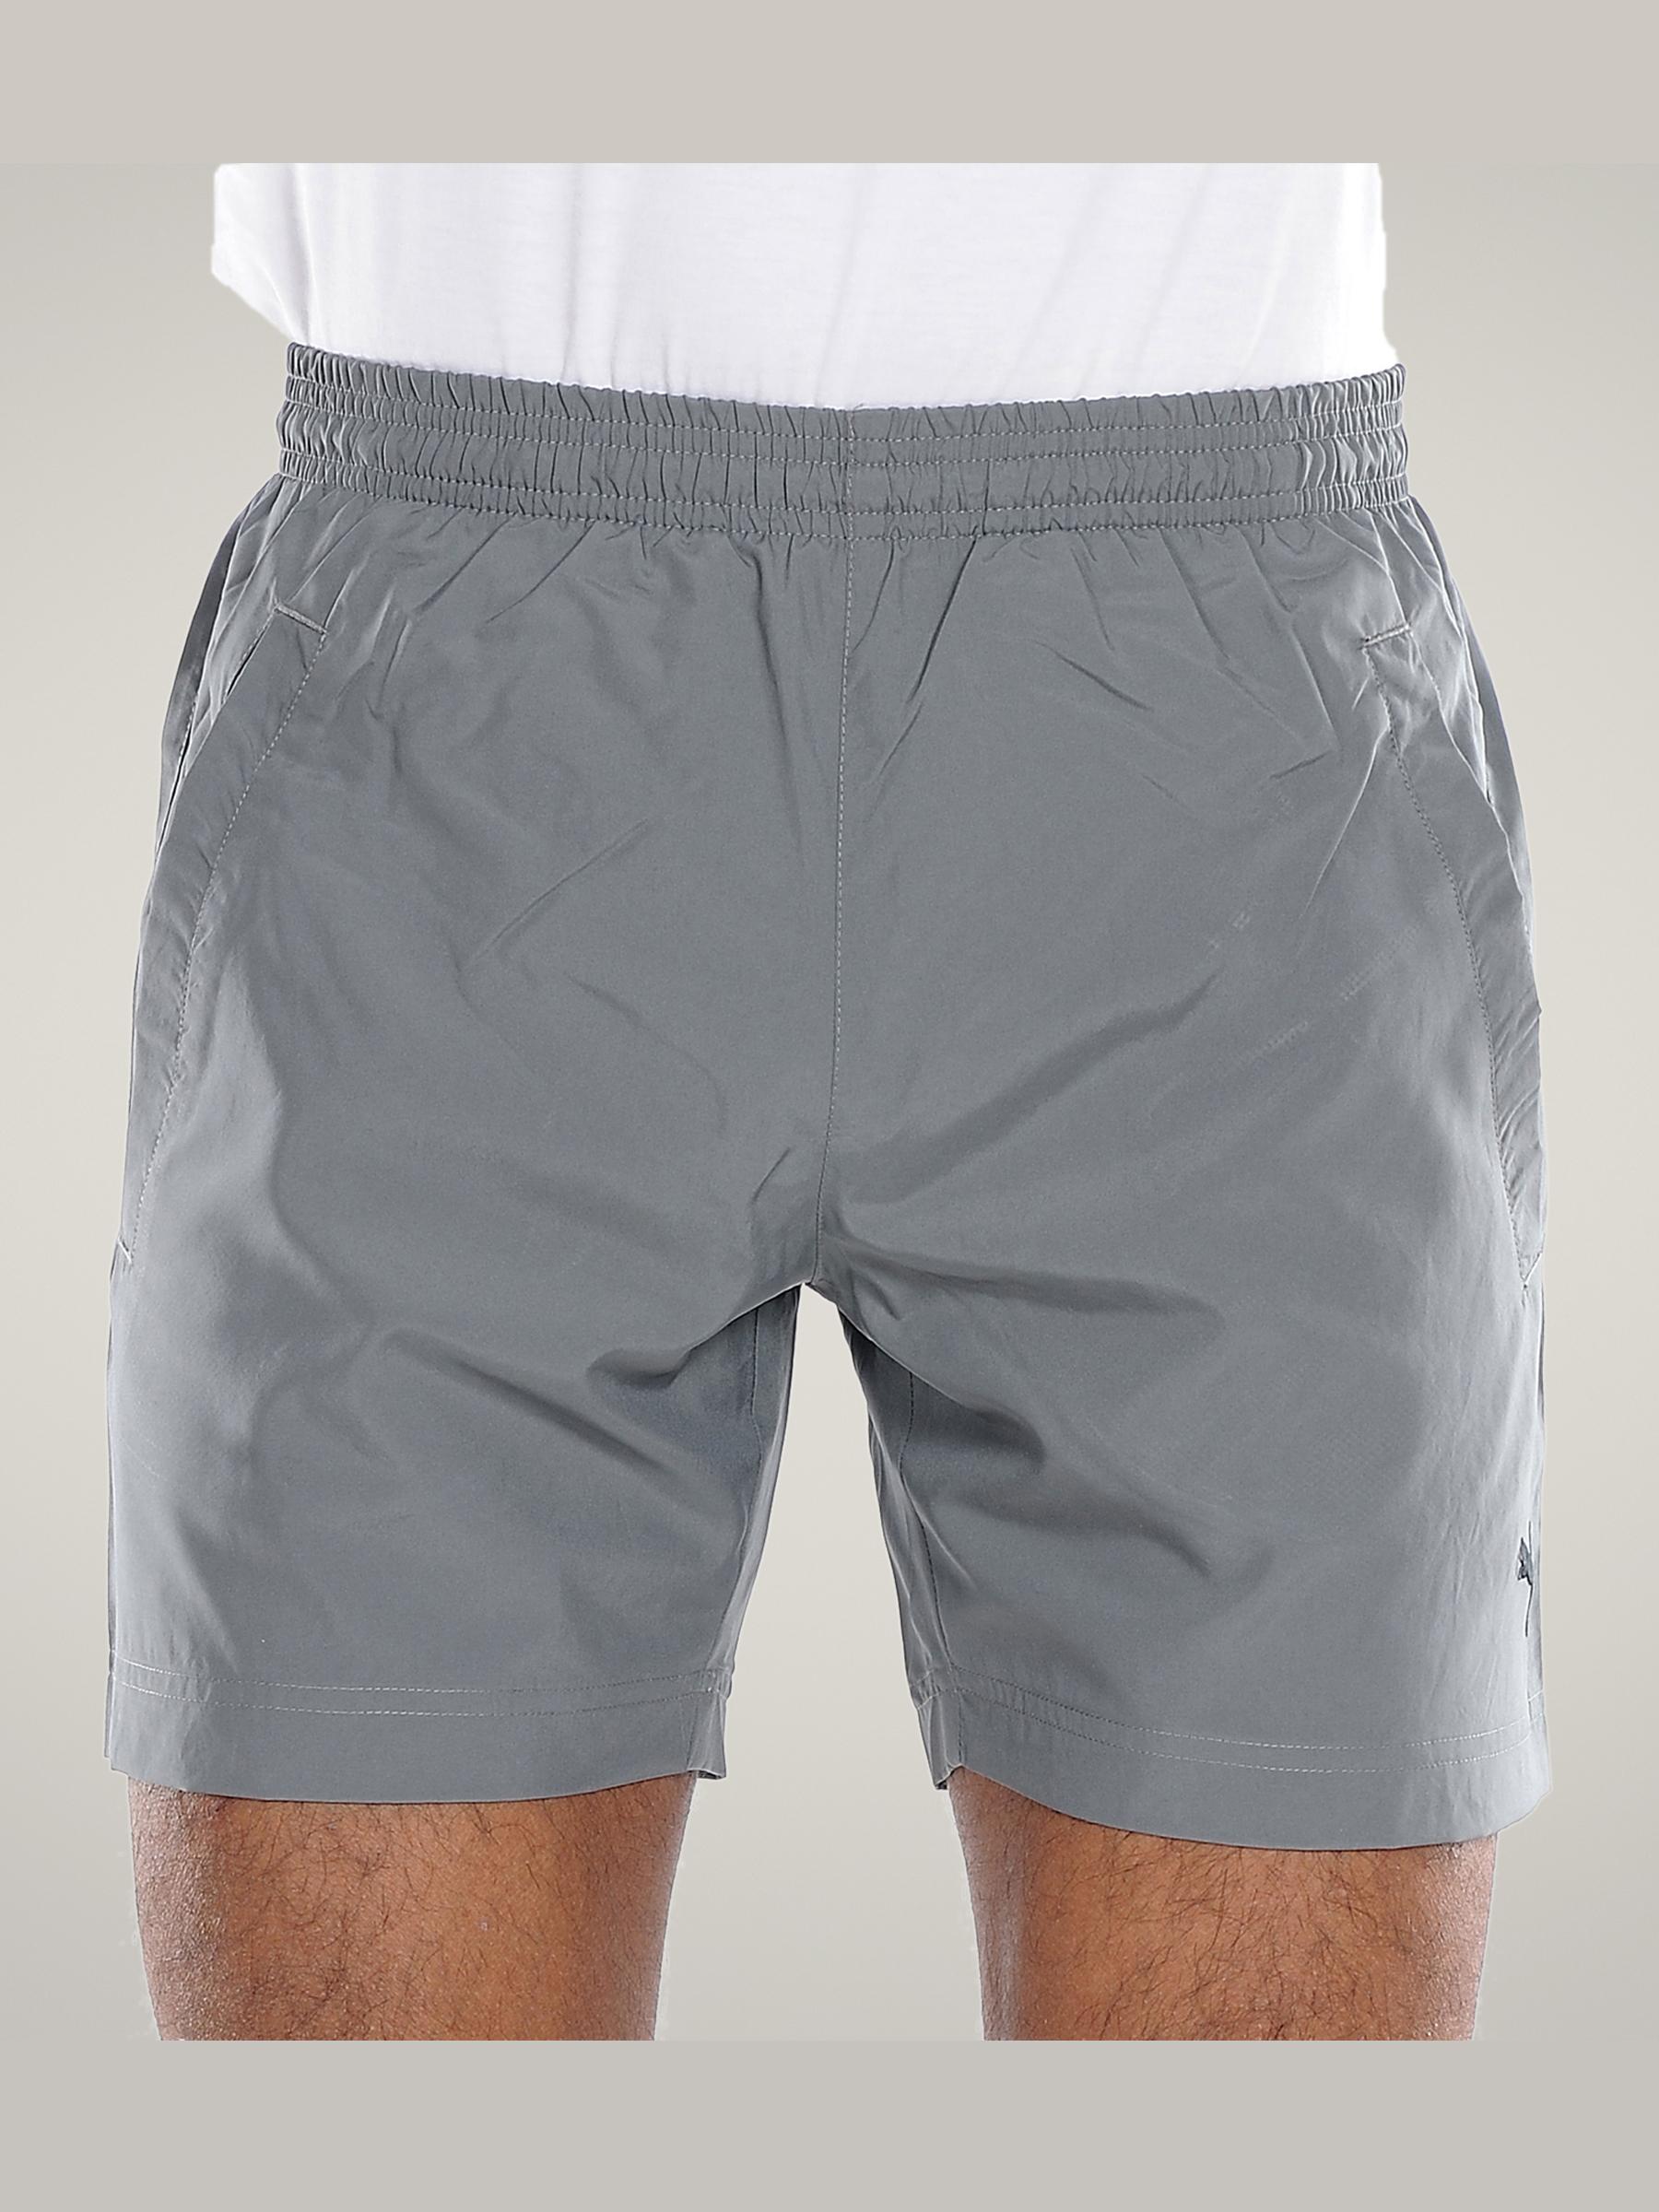 Puma Men's Grey Sports Shorts